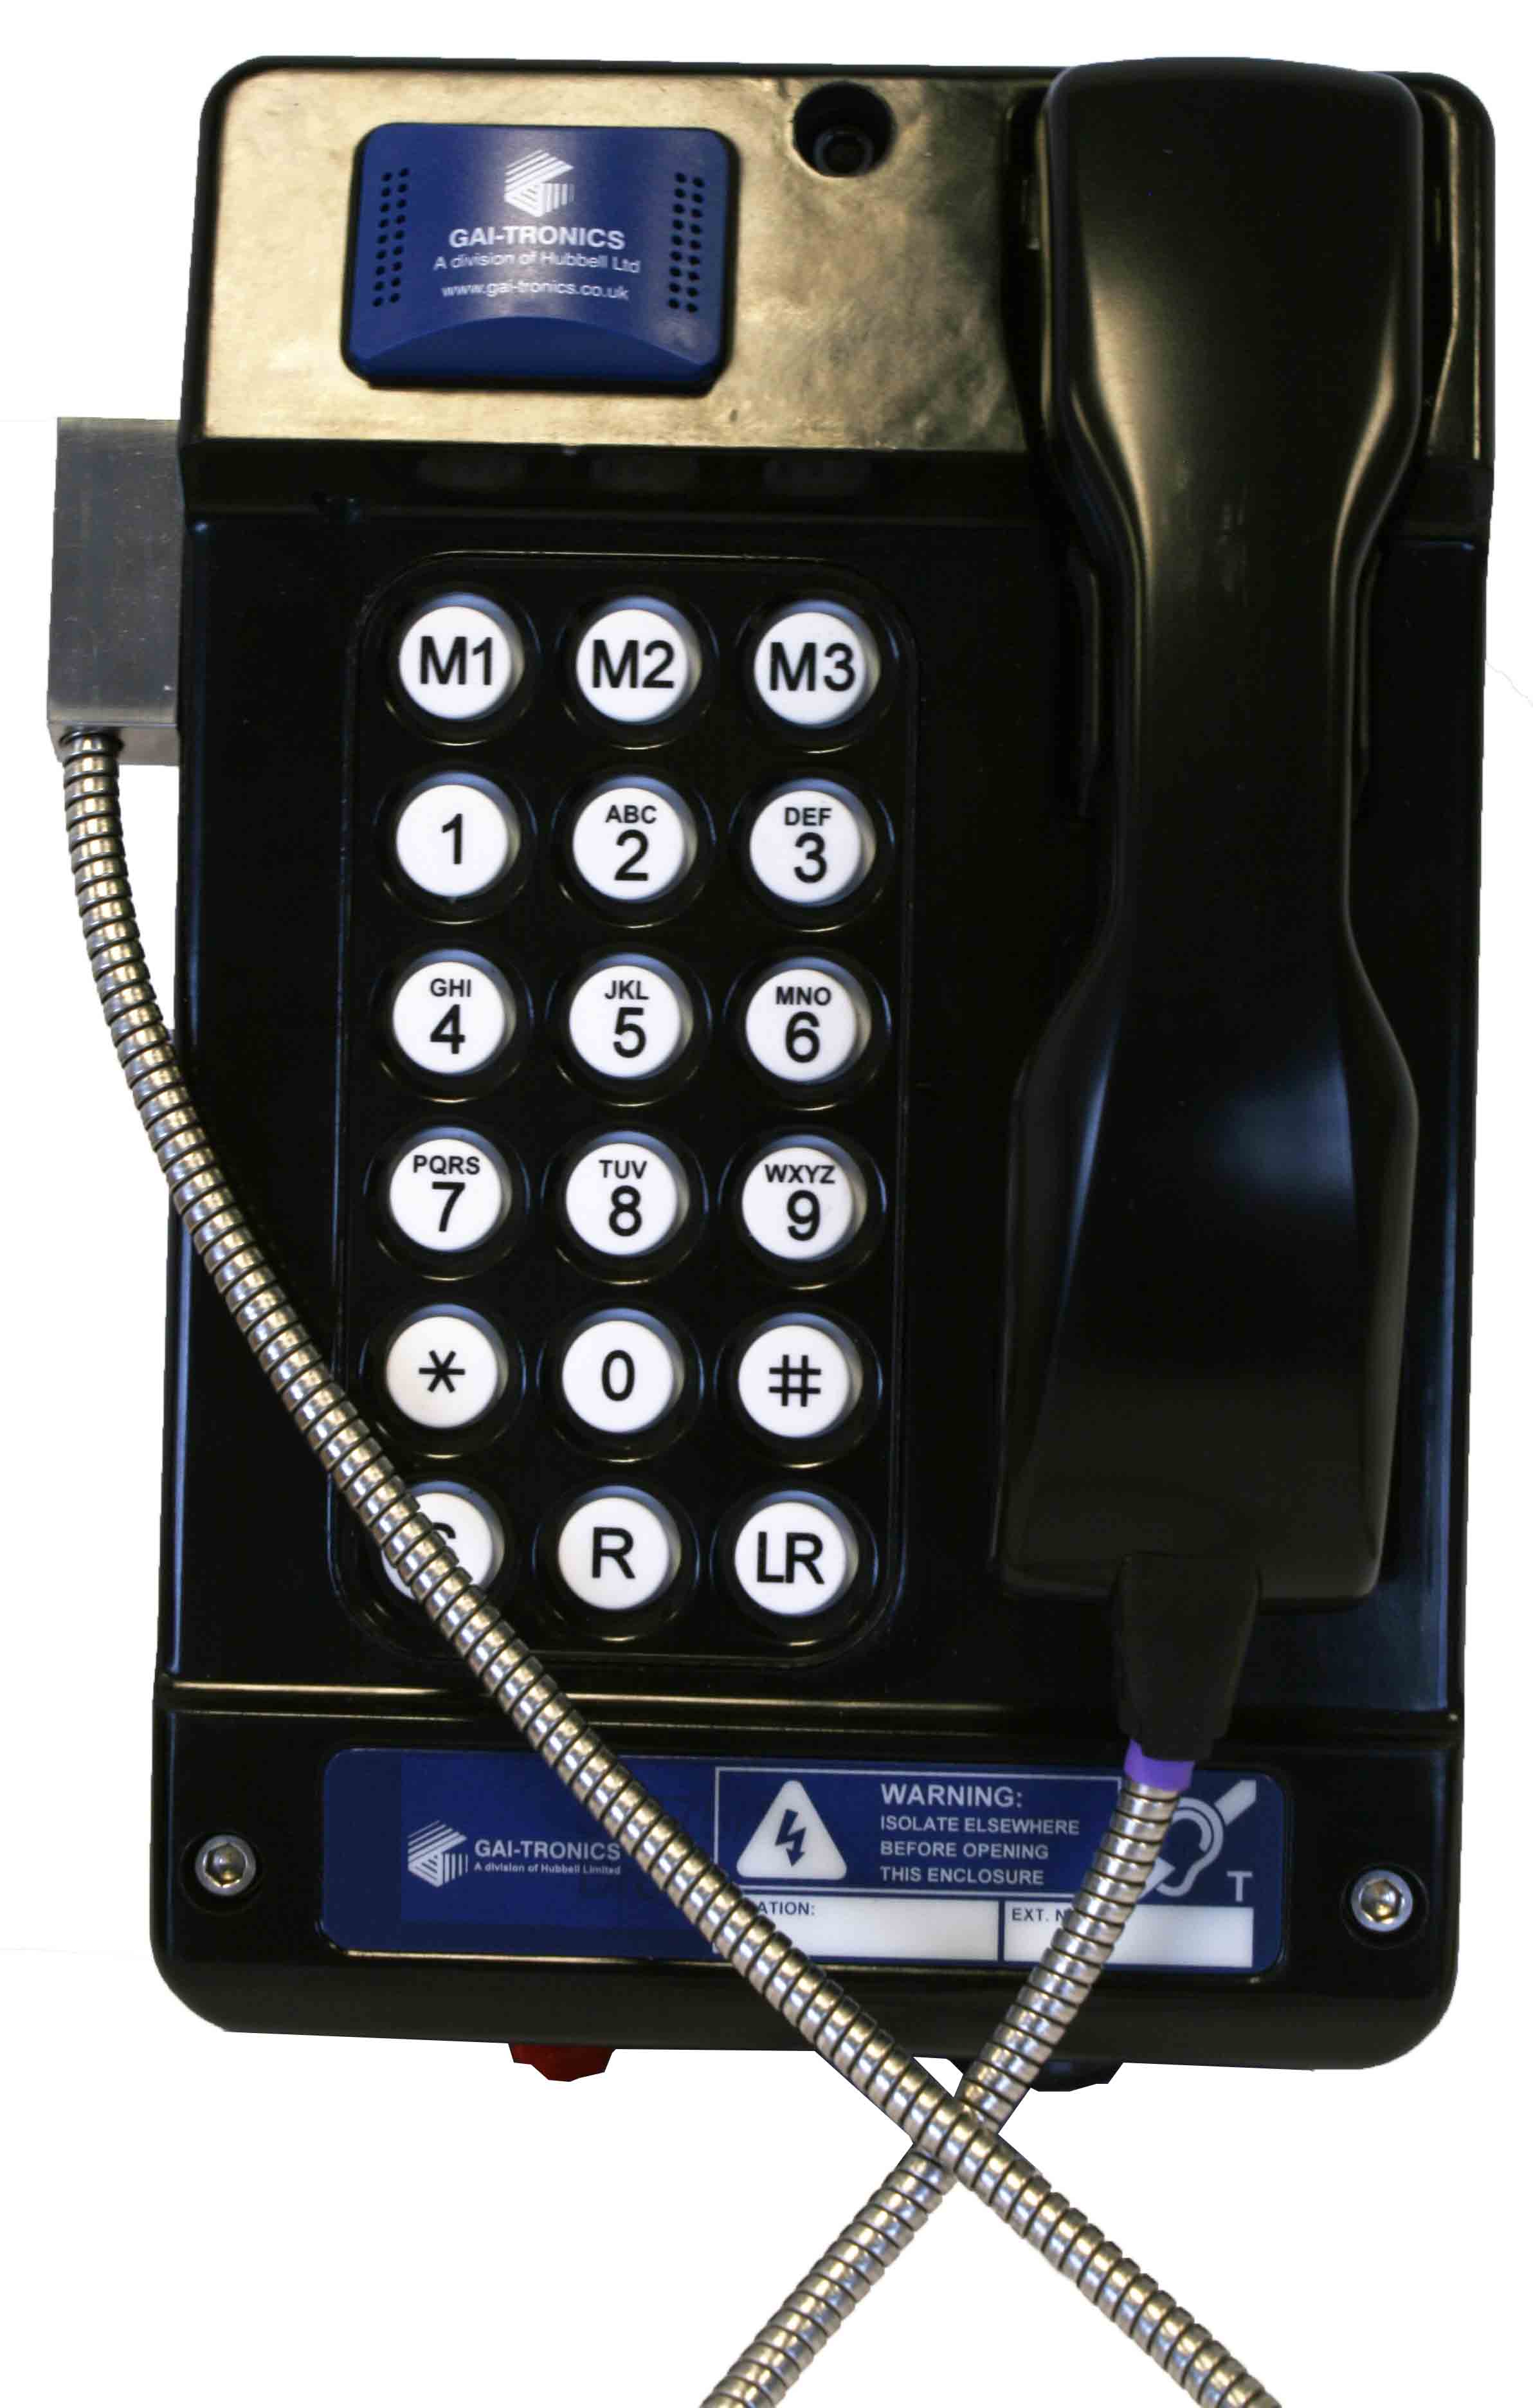 Gai-Tronics Auteldac 5 Telephone